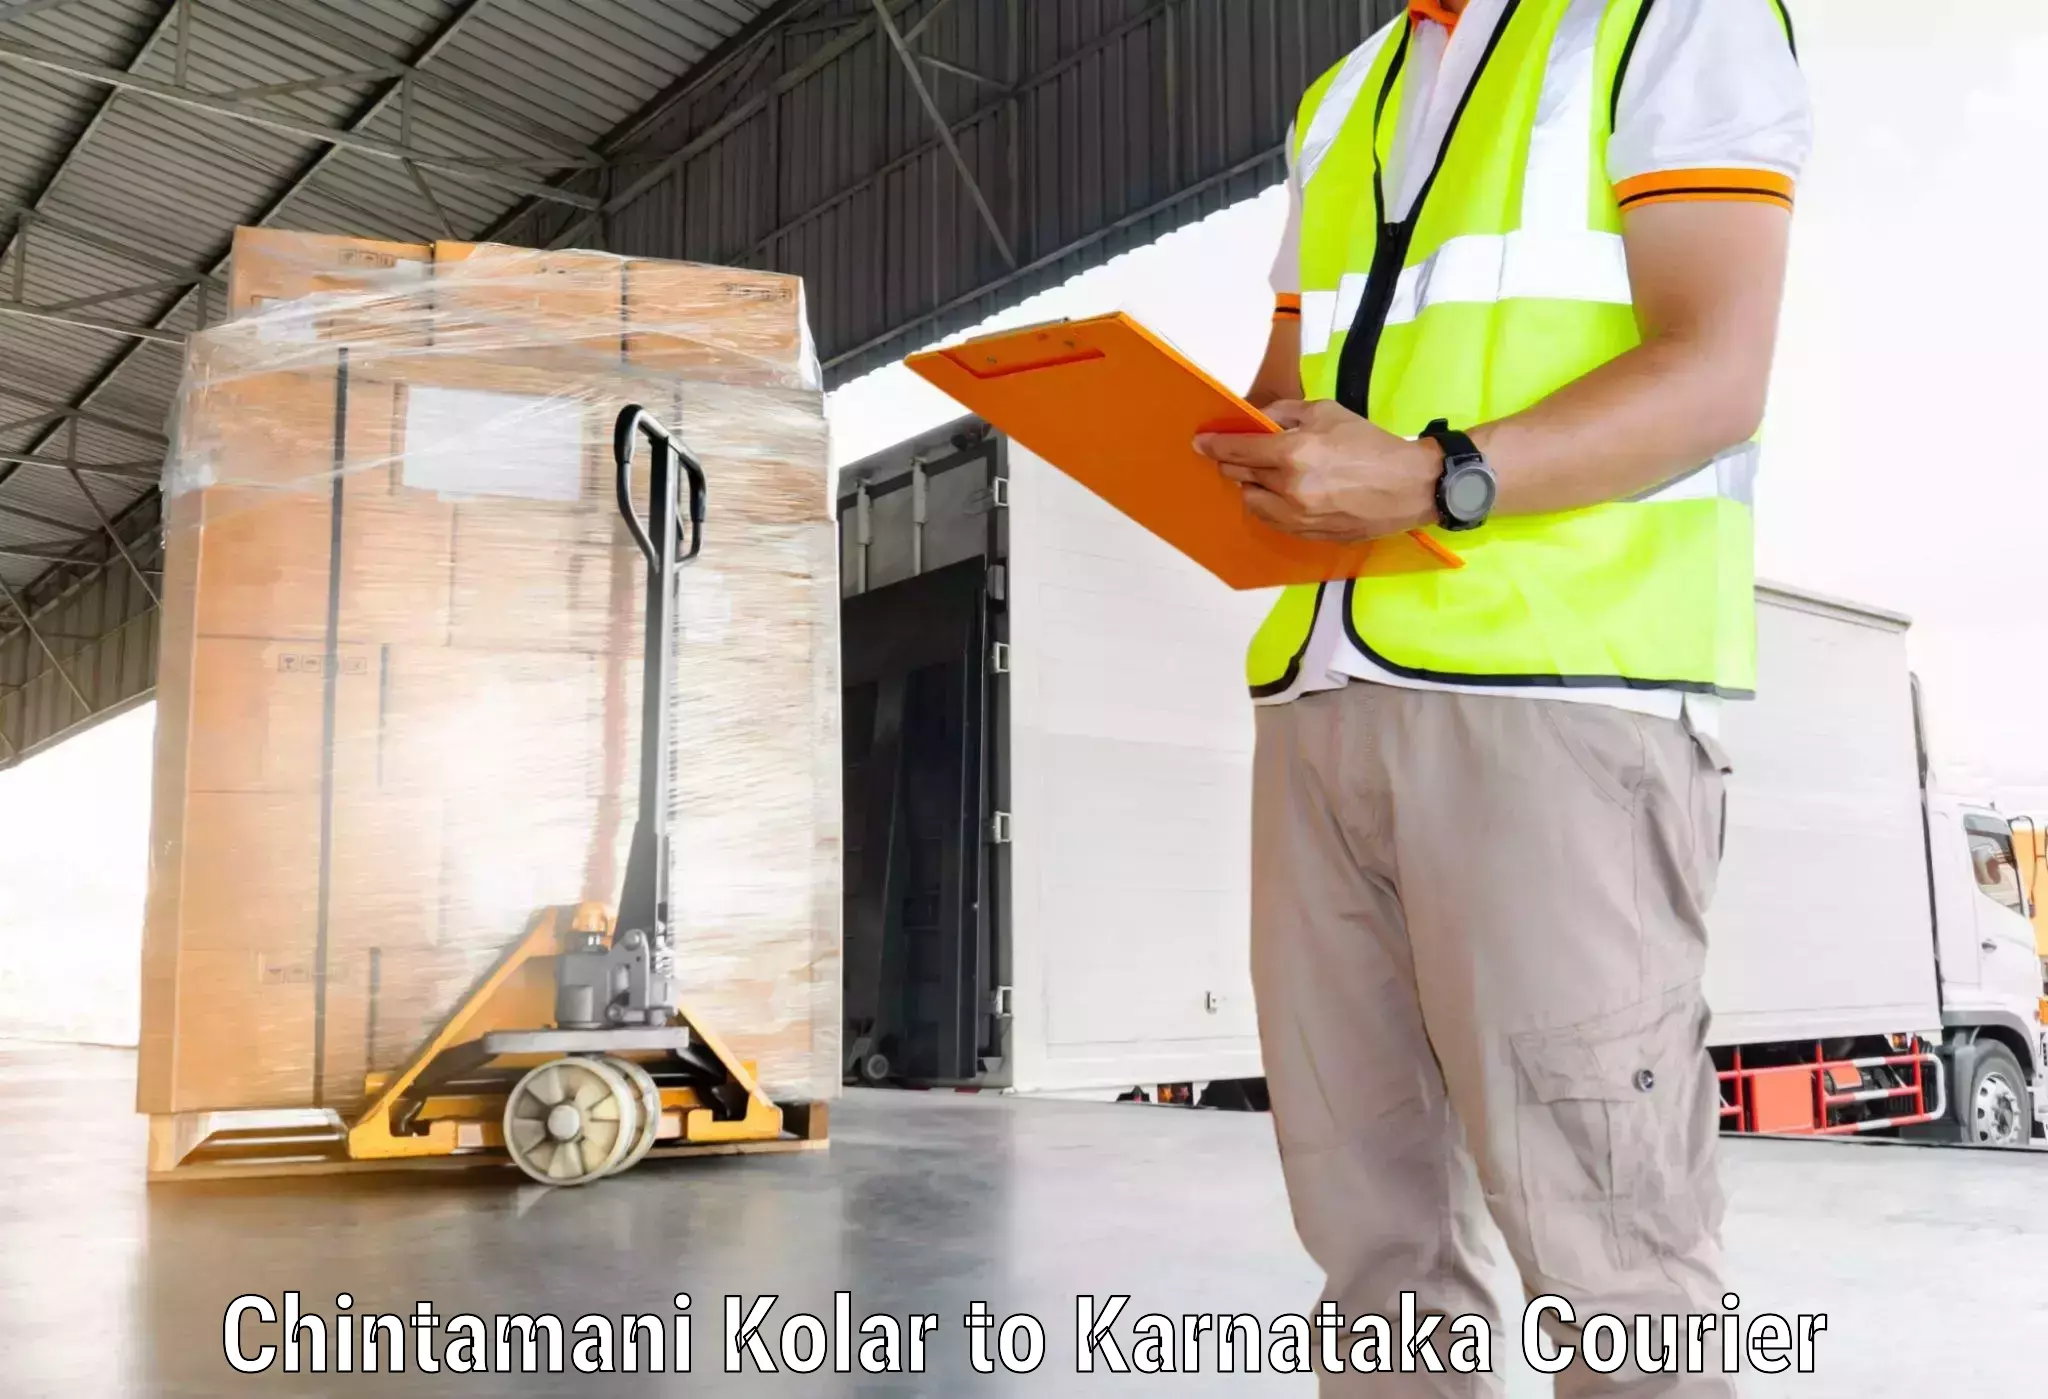 Global shipping networks Chintamani Kolar to Gulbarga